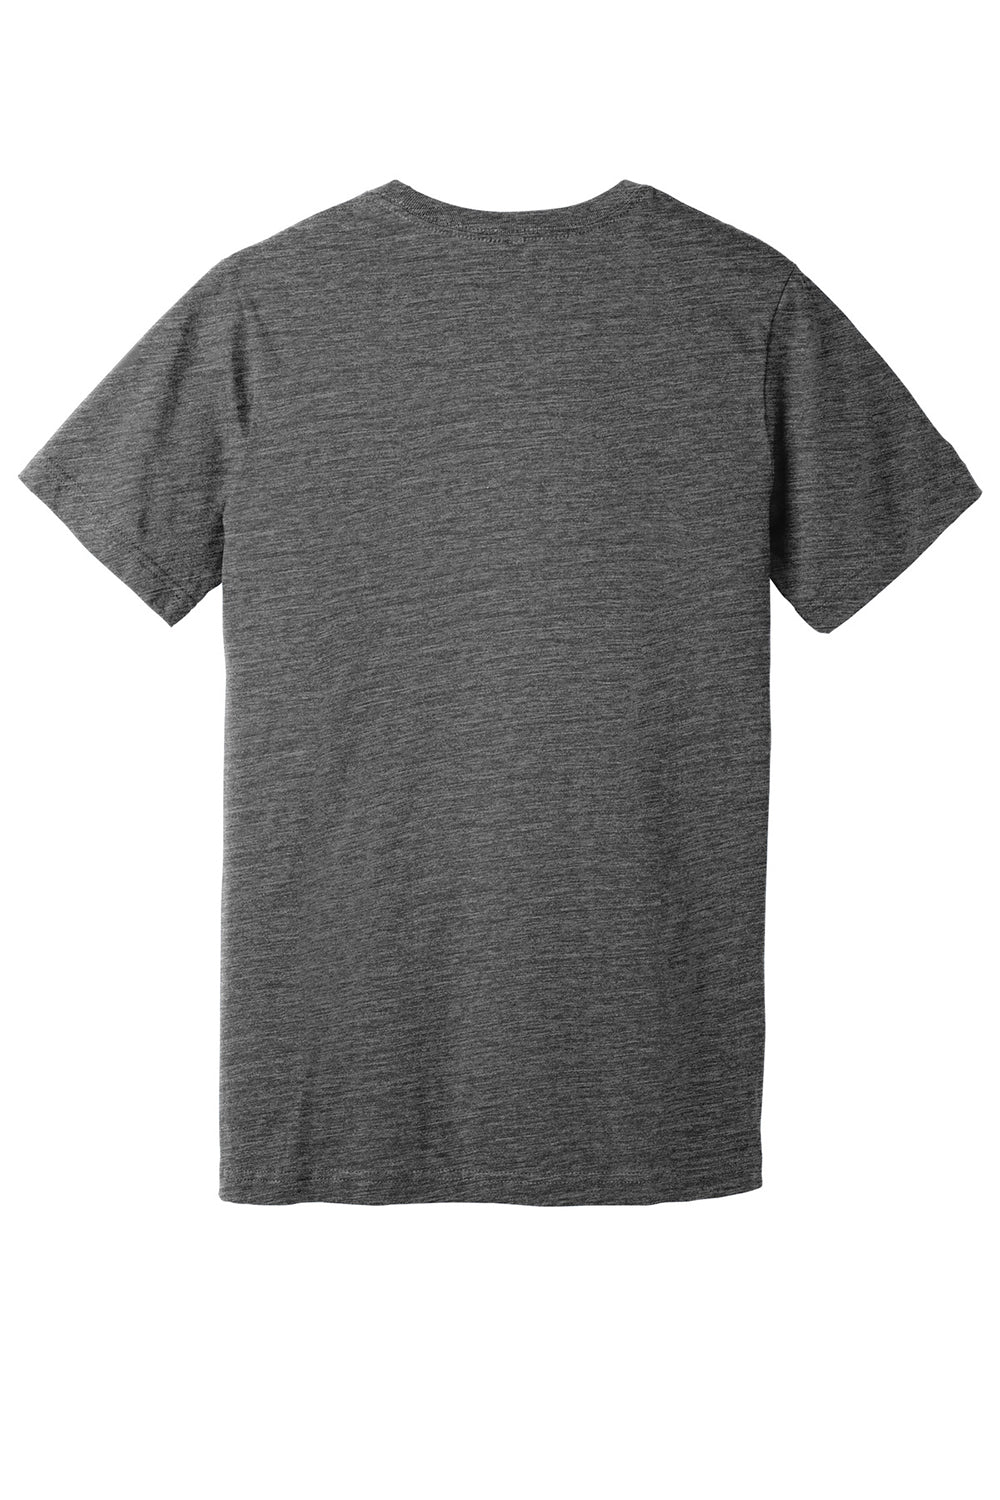 Bella + Canvas BC3655/3655C Mens Textured Jersey Short Sleeve V-Neck T-Shirt Asphalt Grey Slub Flat Back